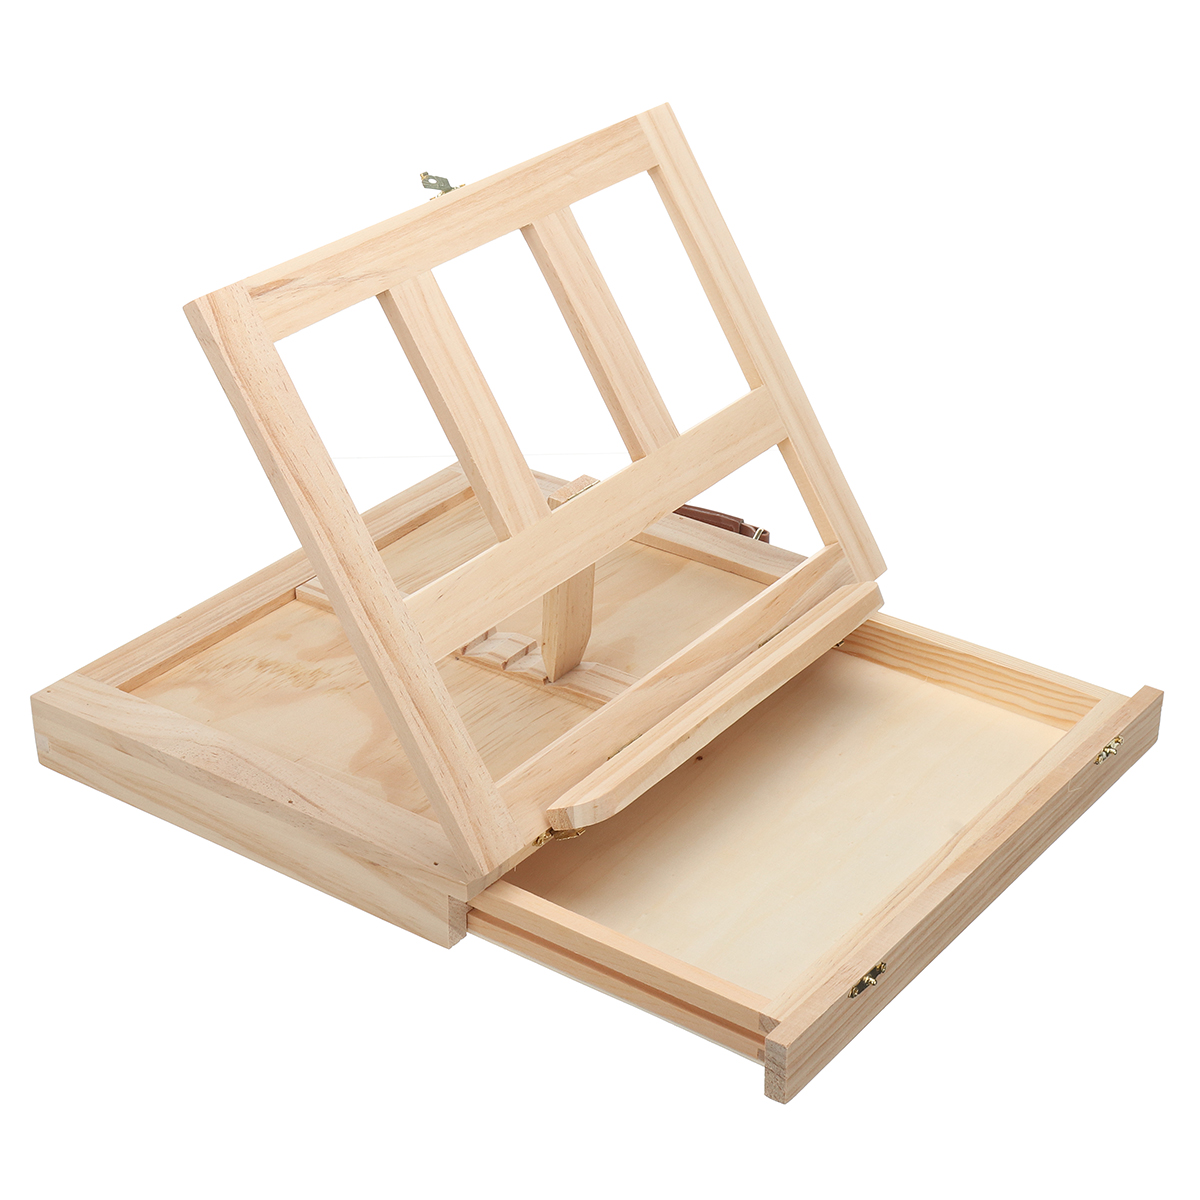 Artist Table Easel Art Drawing Painting Wood Sketching Box Board Desktop Home 18